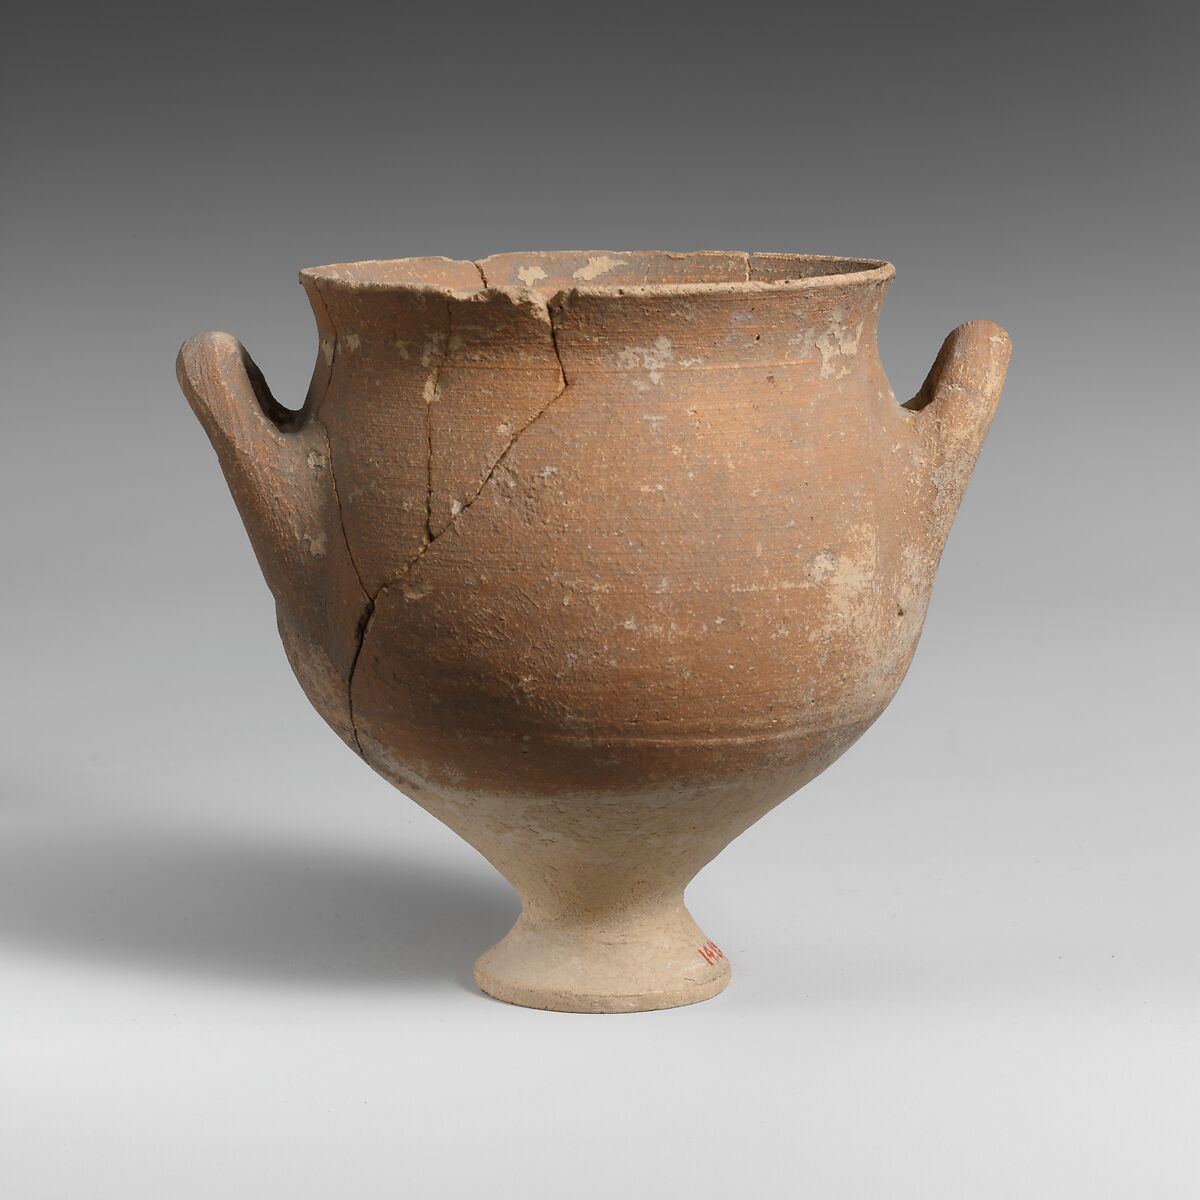 Terracotta deep skyphos (drinking cup), Terracotta, Greek, Cretan 